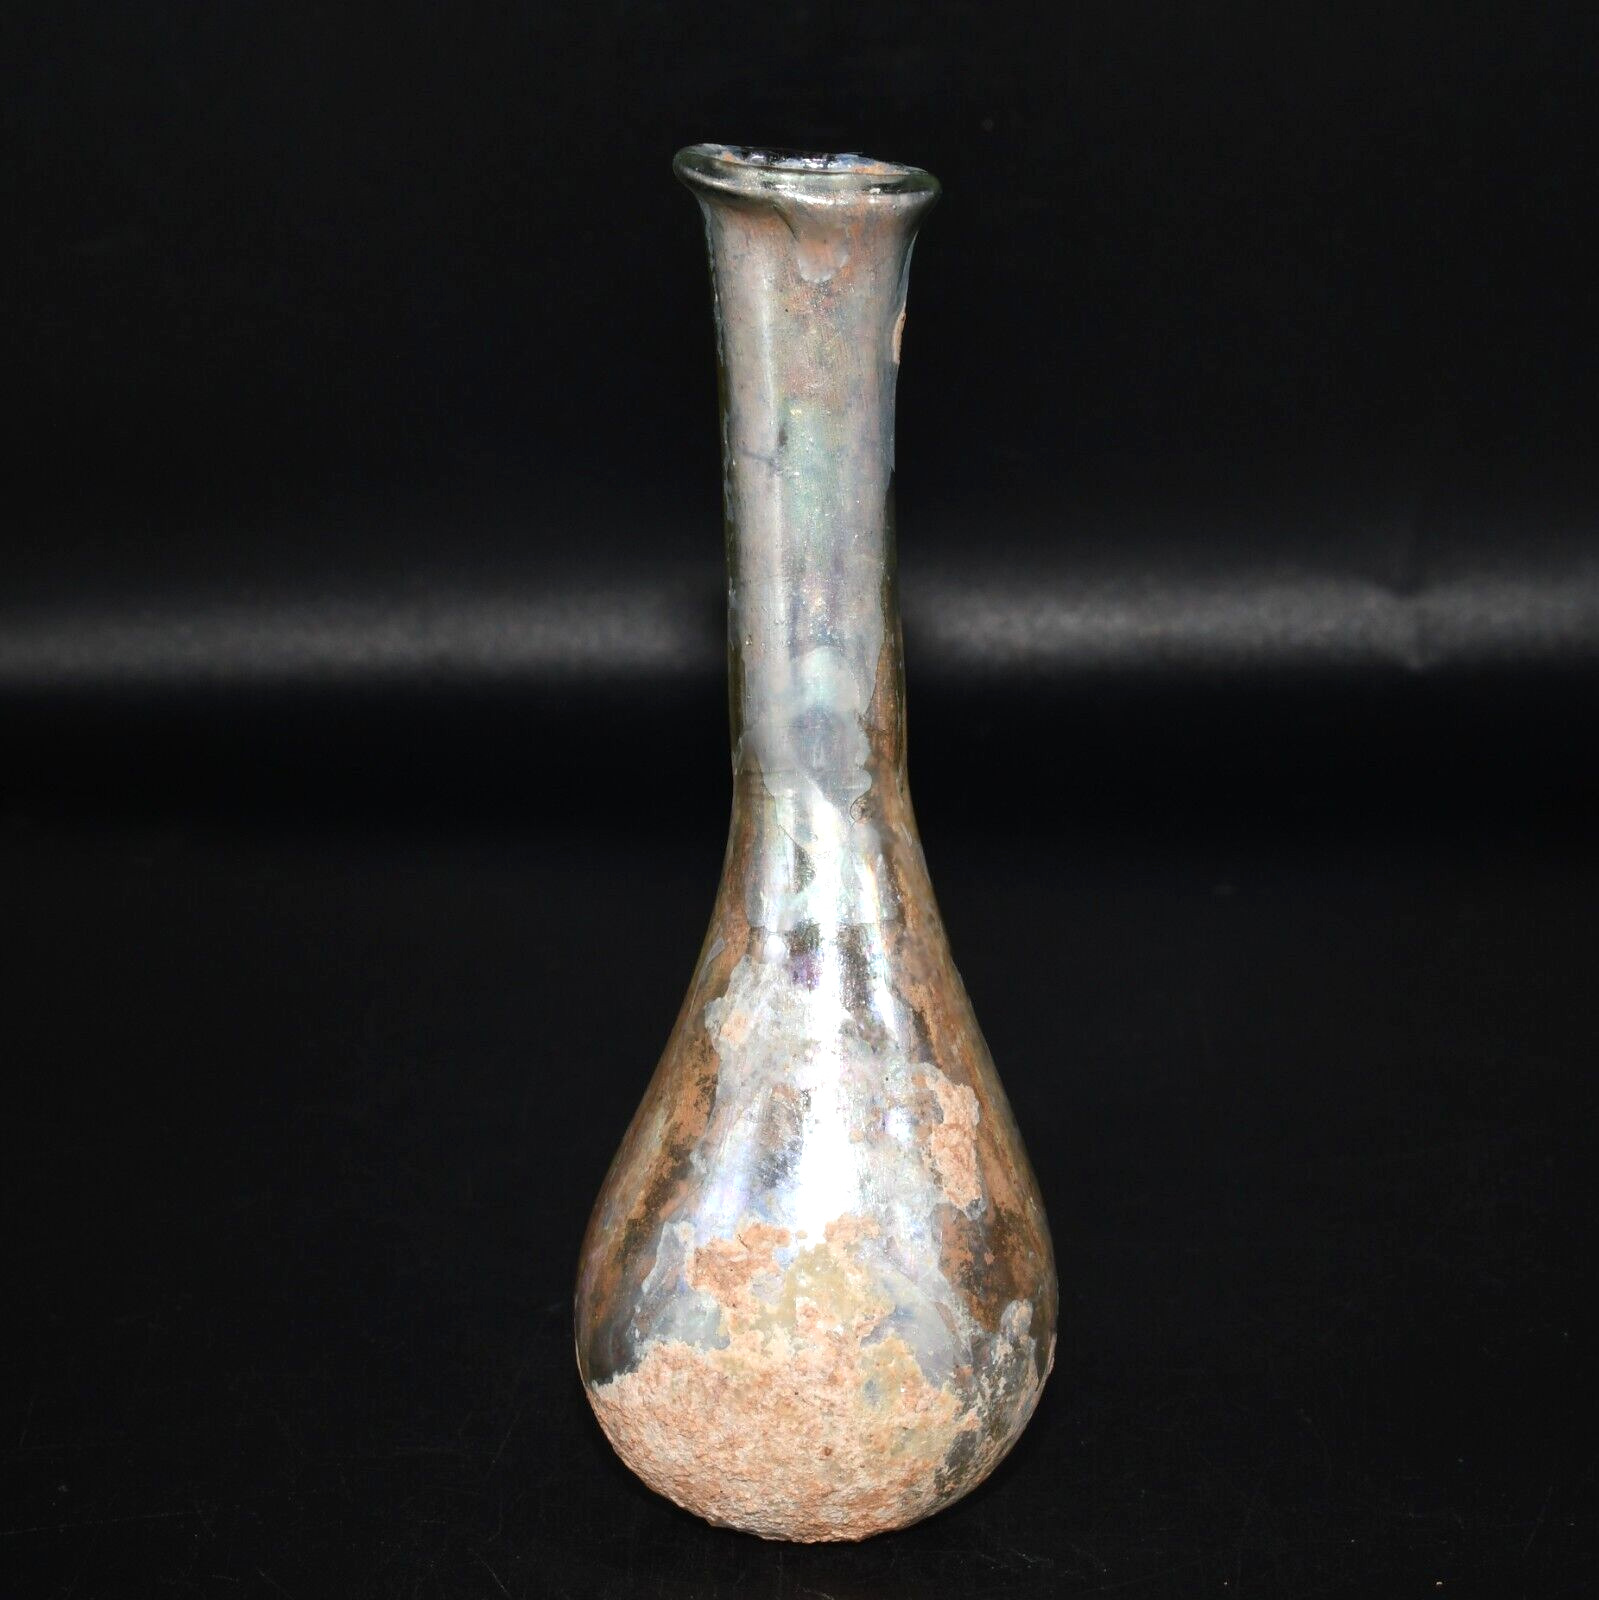 Genuine Ancient Roman Glass Bottle with Amazing Iridescent Patina C. 1st Century